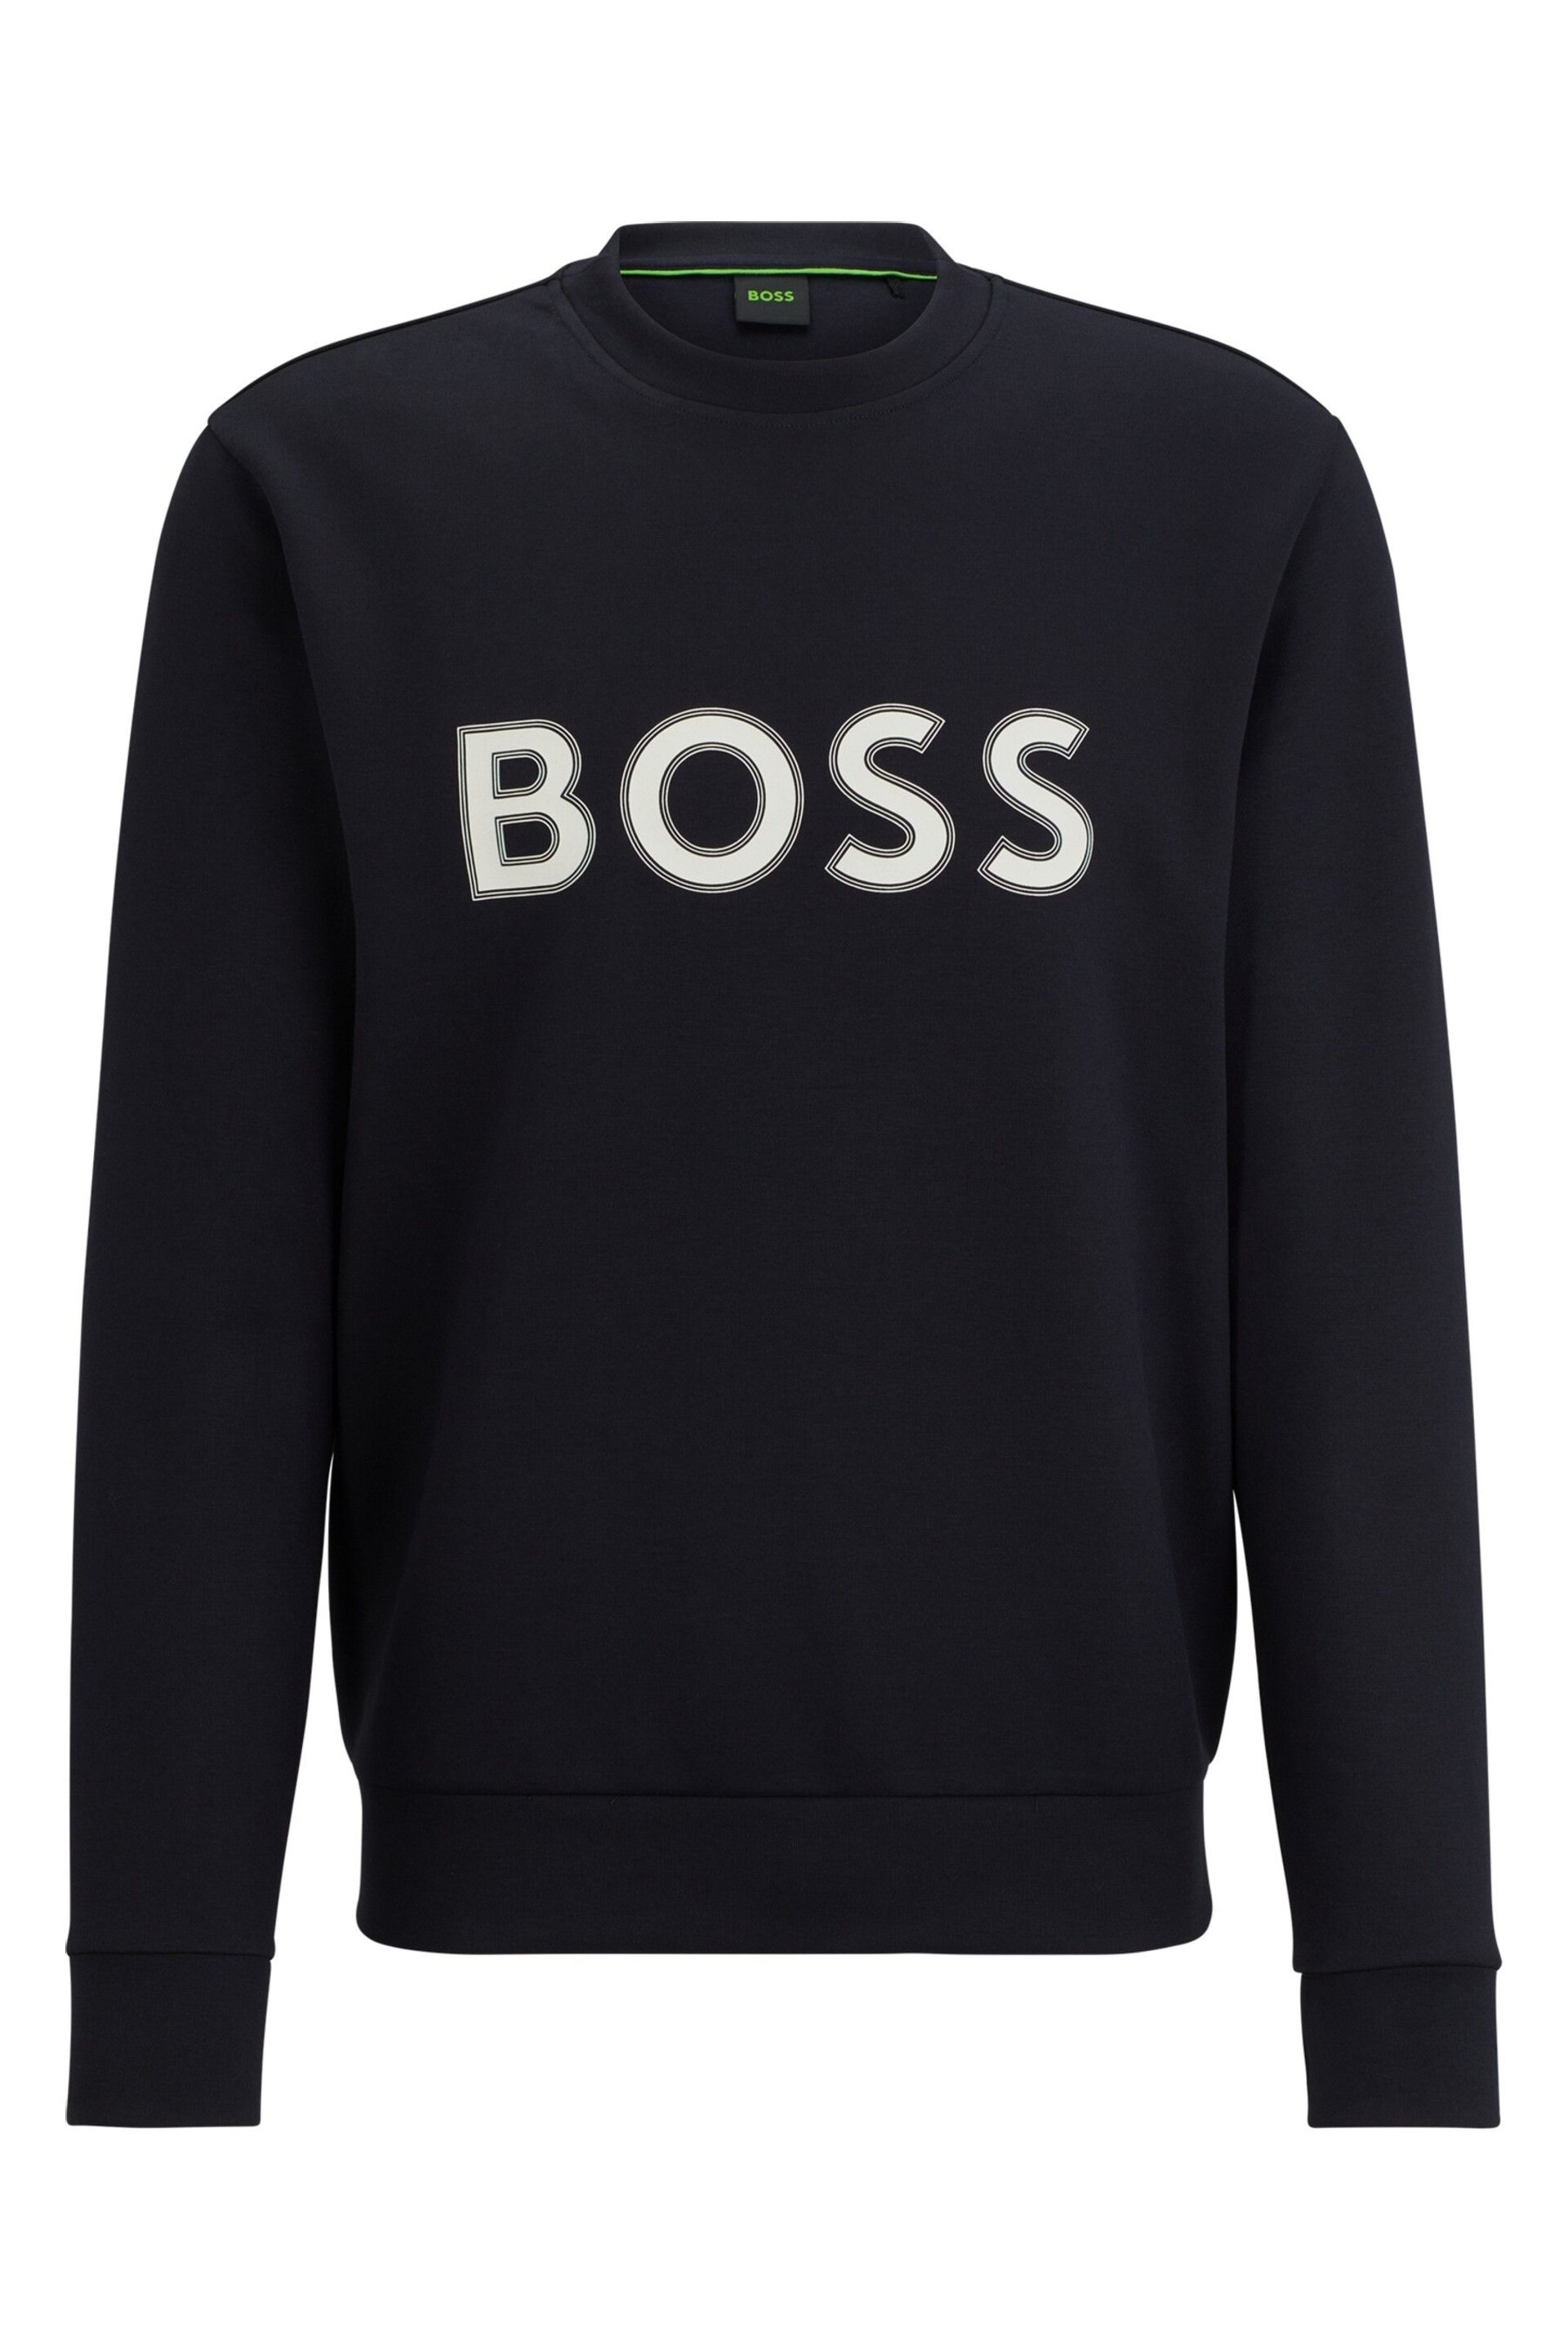 BOSS Blue Cotton-Blend Sweatshirt With HD Logo Print - Image 5 of 5